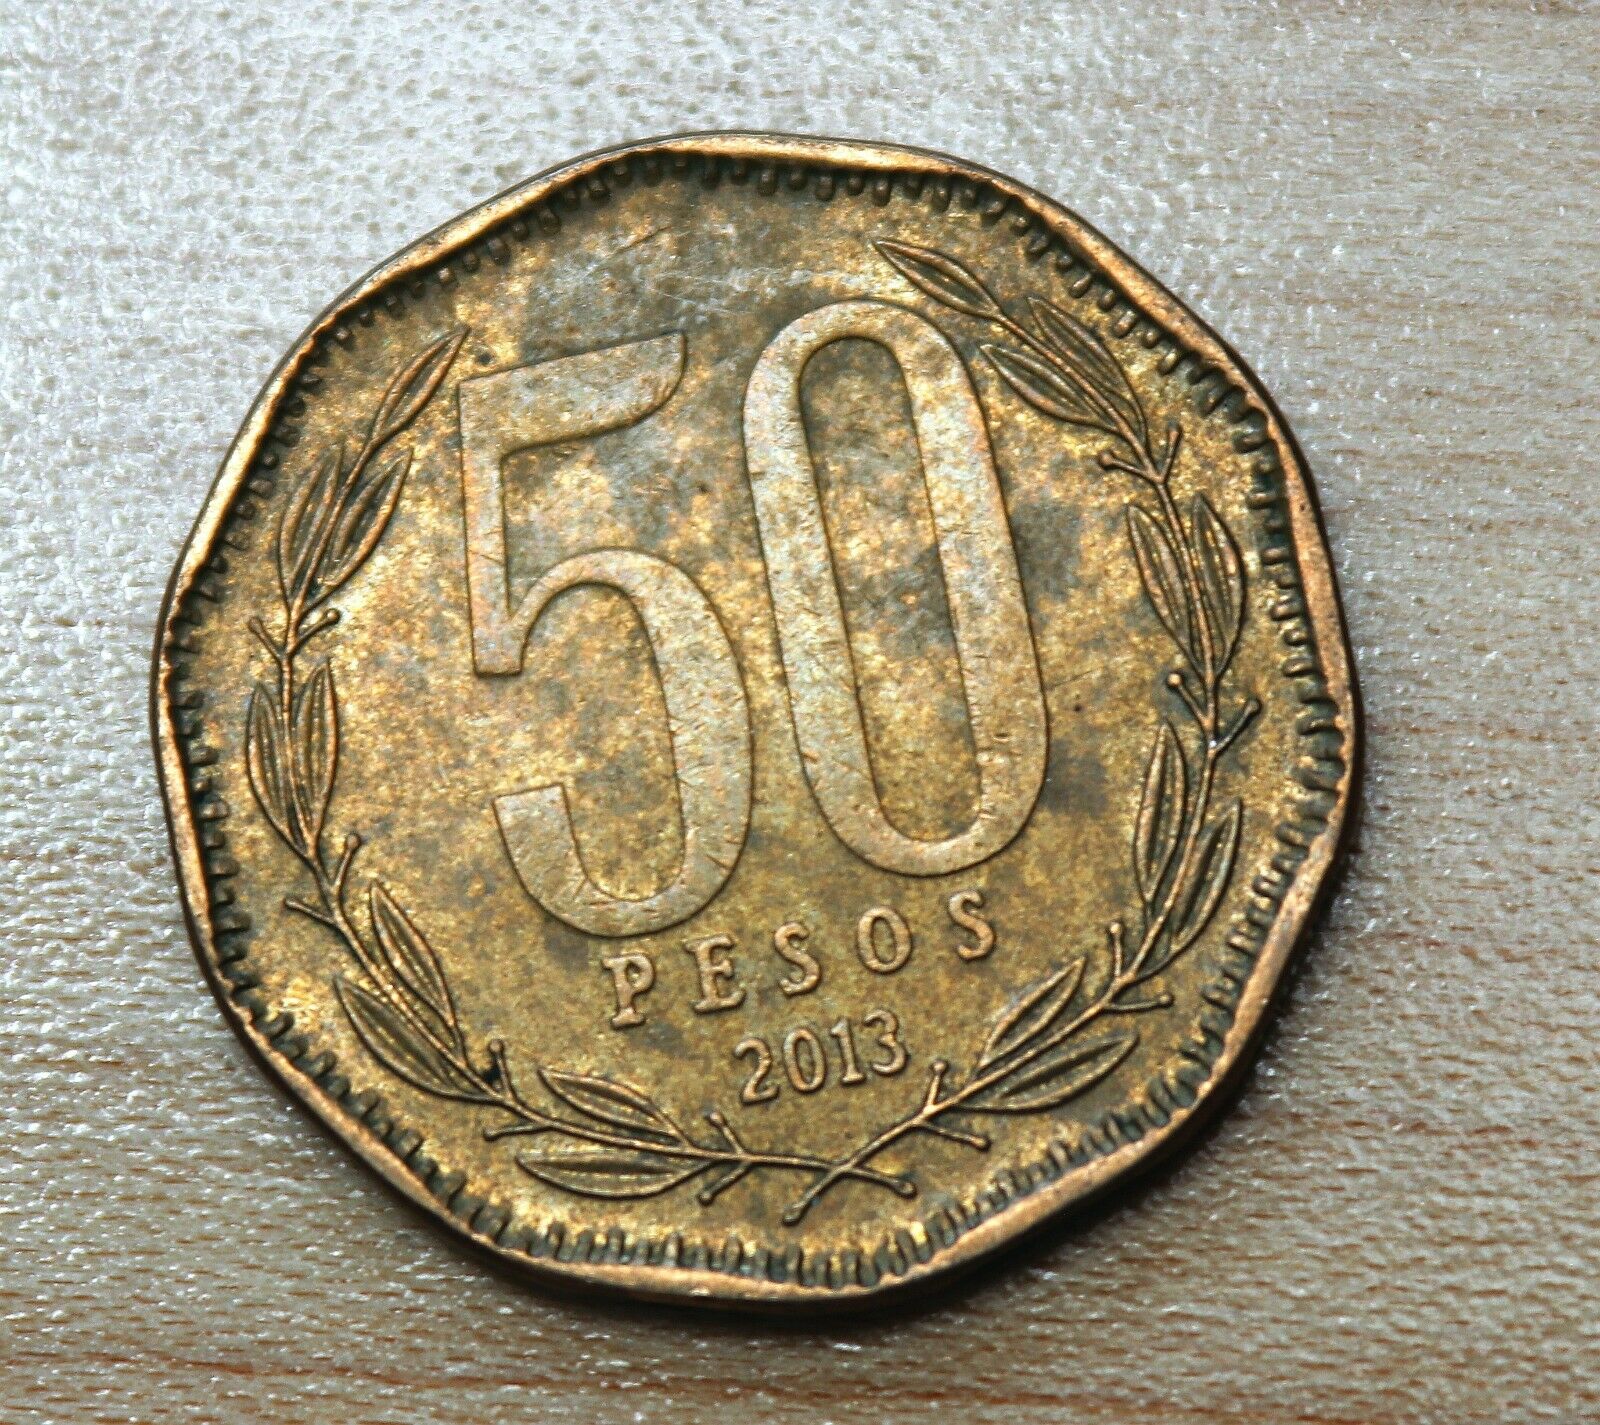 2013 Chile 50 Pesos